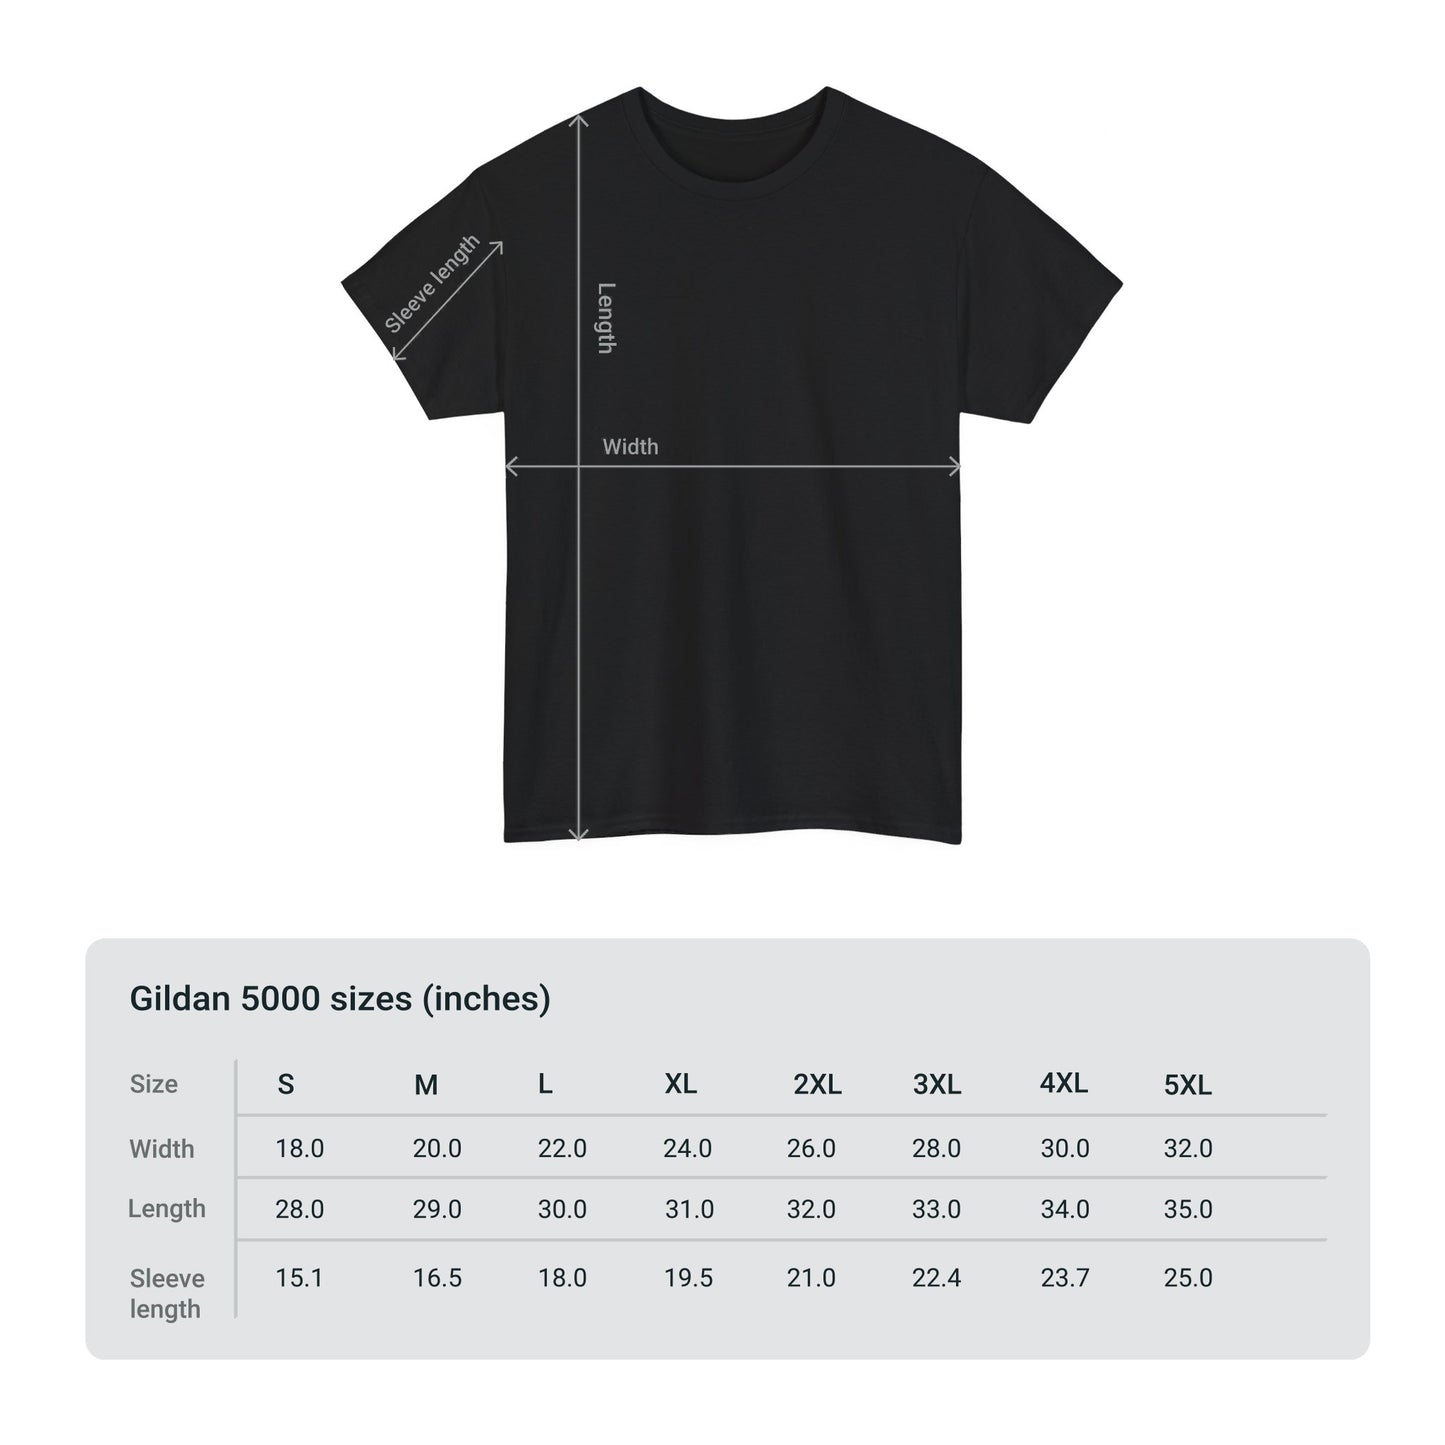 basketball High Quality Printed Unisex Heavy Cotton T-Shirt